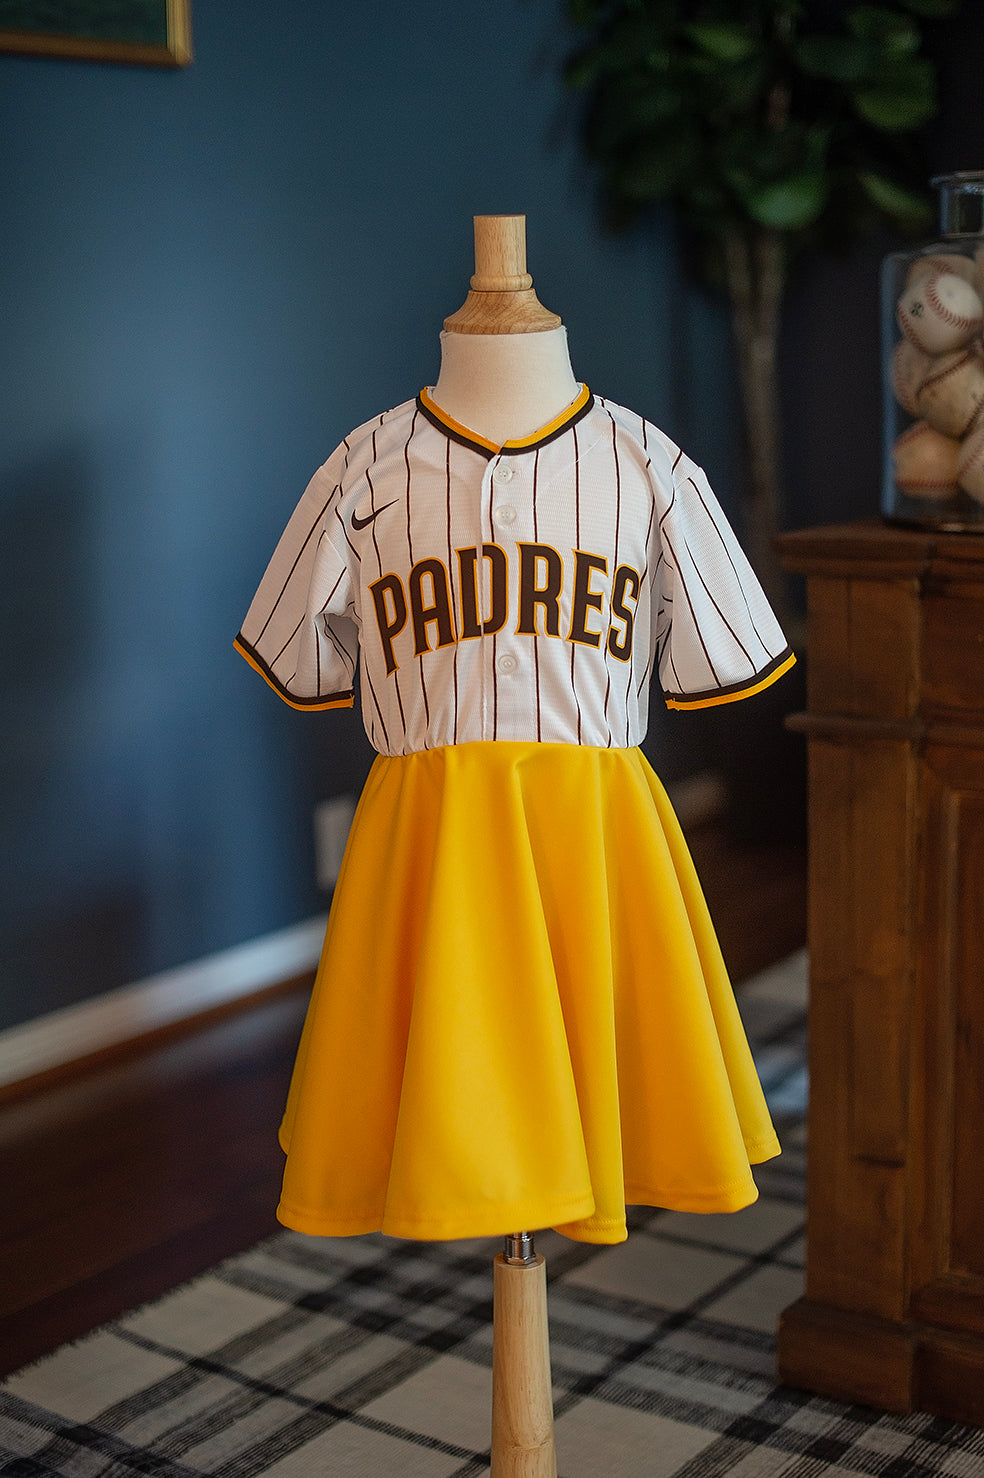 San Diego Padres dress  San diego padres, Fashion, Tops